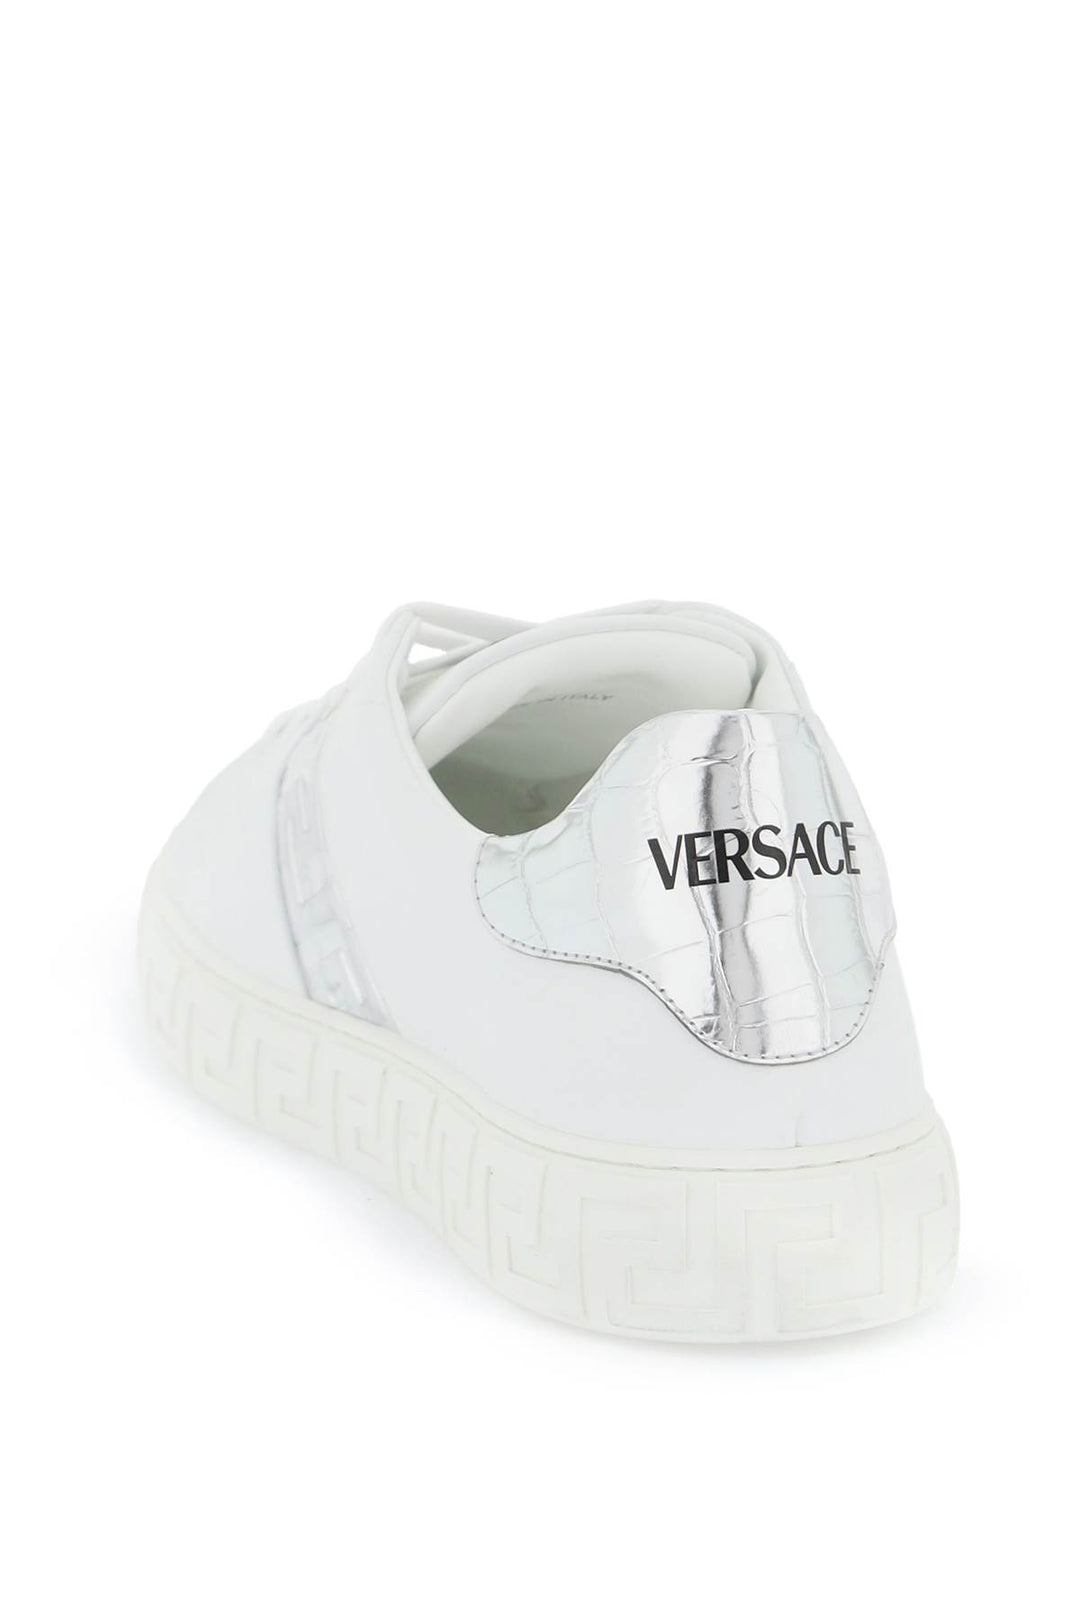 Versace Greek Pattern Sneakers   Argento